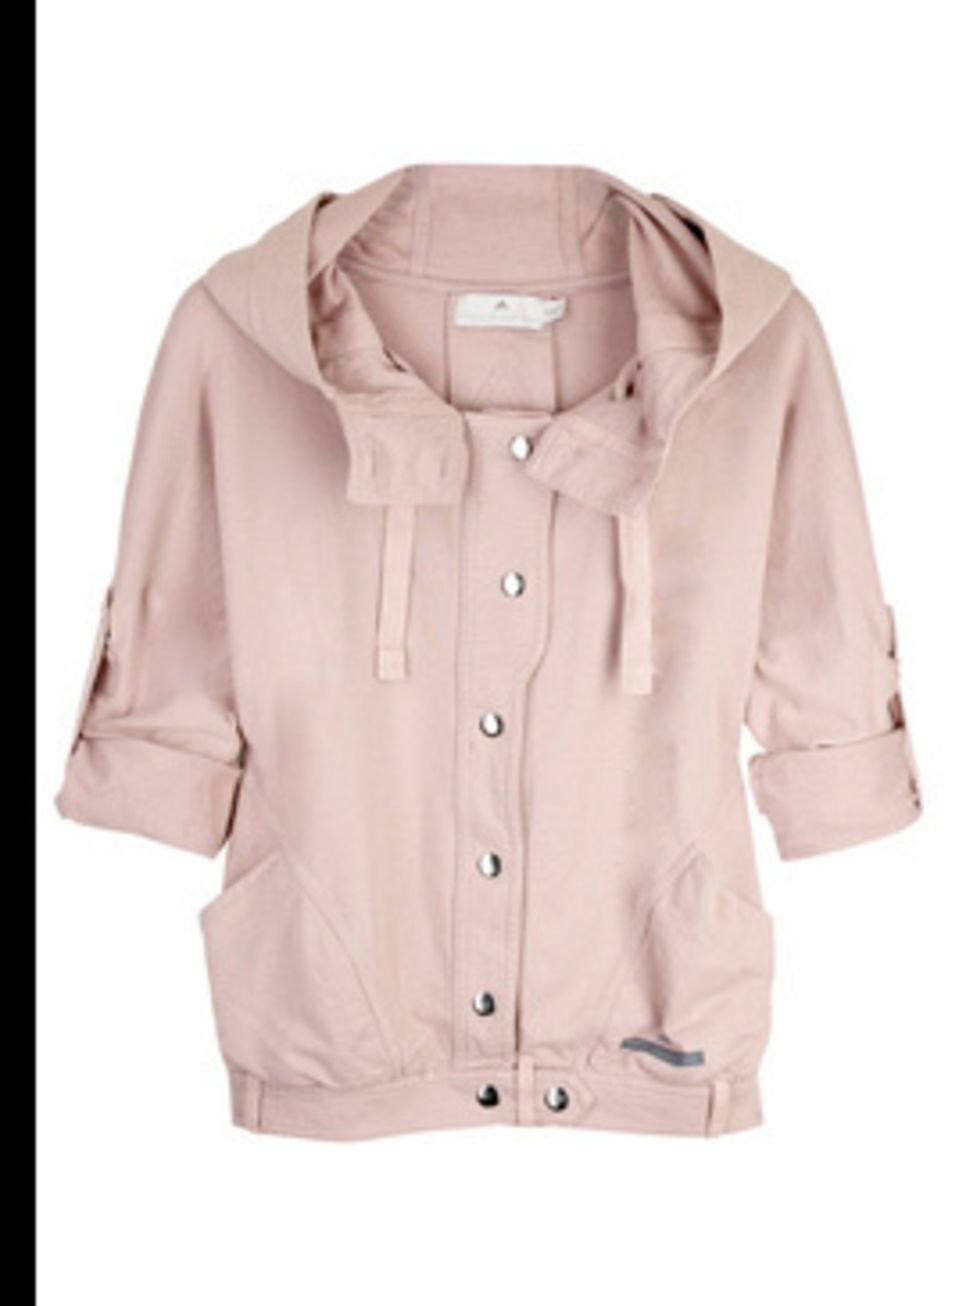 <p>Cotton hooded sweatshirt jacket, £75, by Adidas by Stella McCartney at <a href="http://www.net-a-porter.com/product/41055">www.net-a-porter.com</a></p>